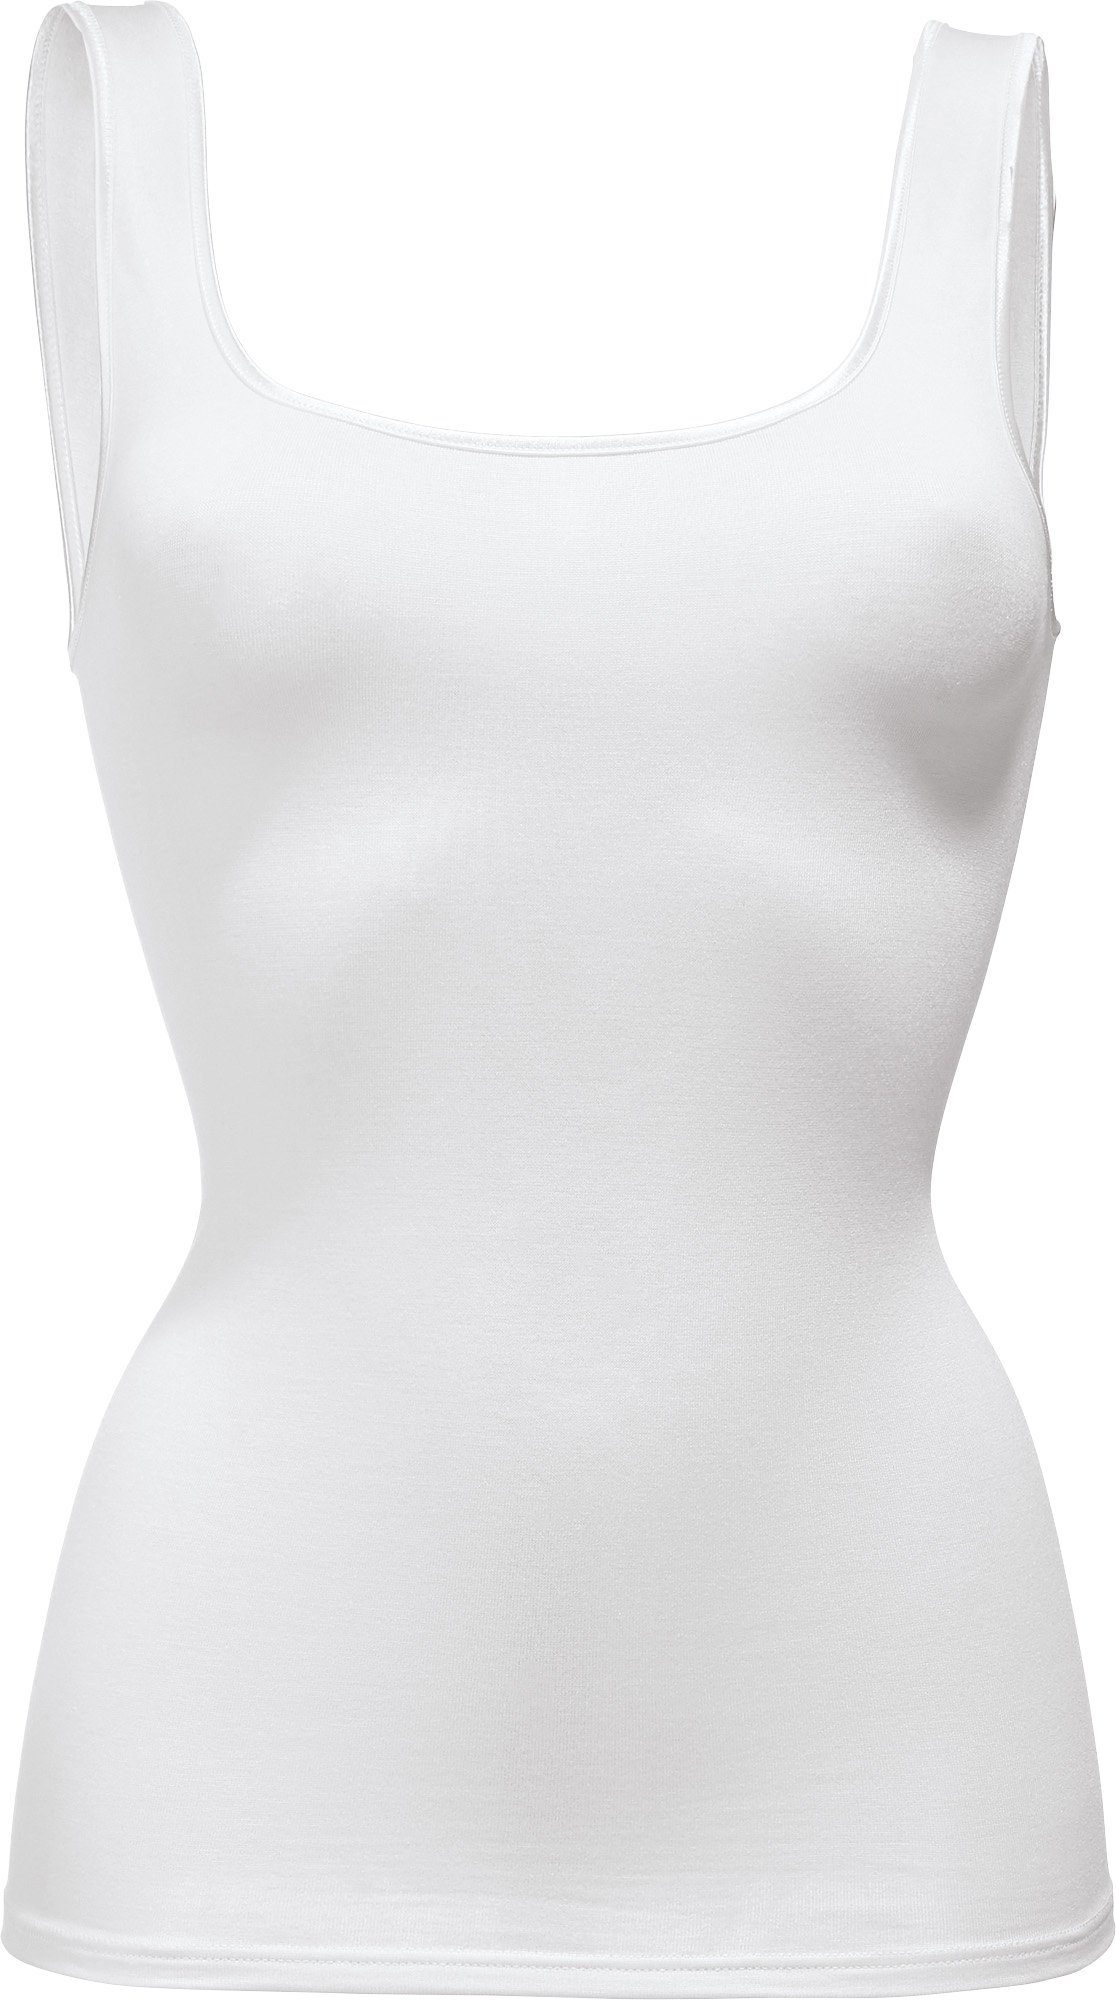 Modal Damen-Unterhemd Uni weiß Unterhemd Pompadour